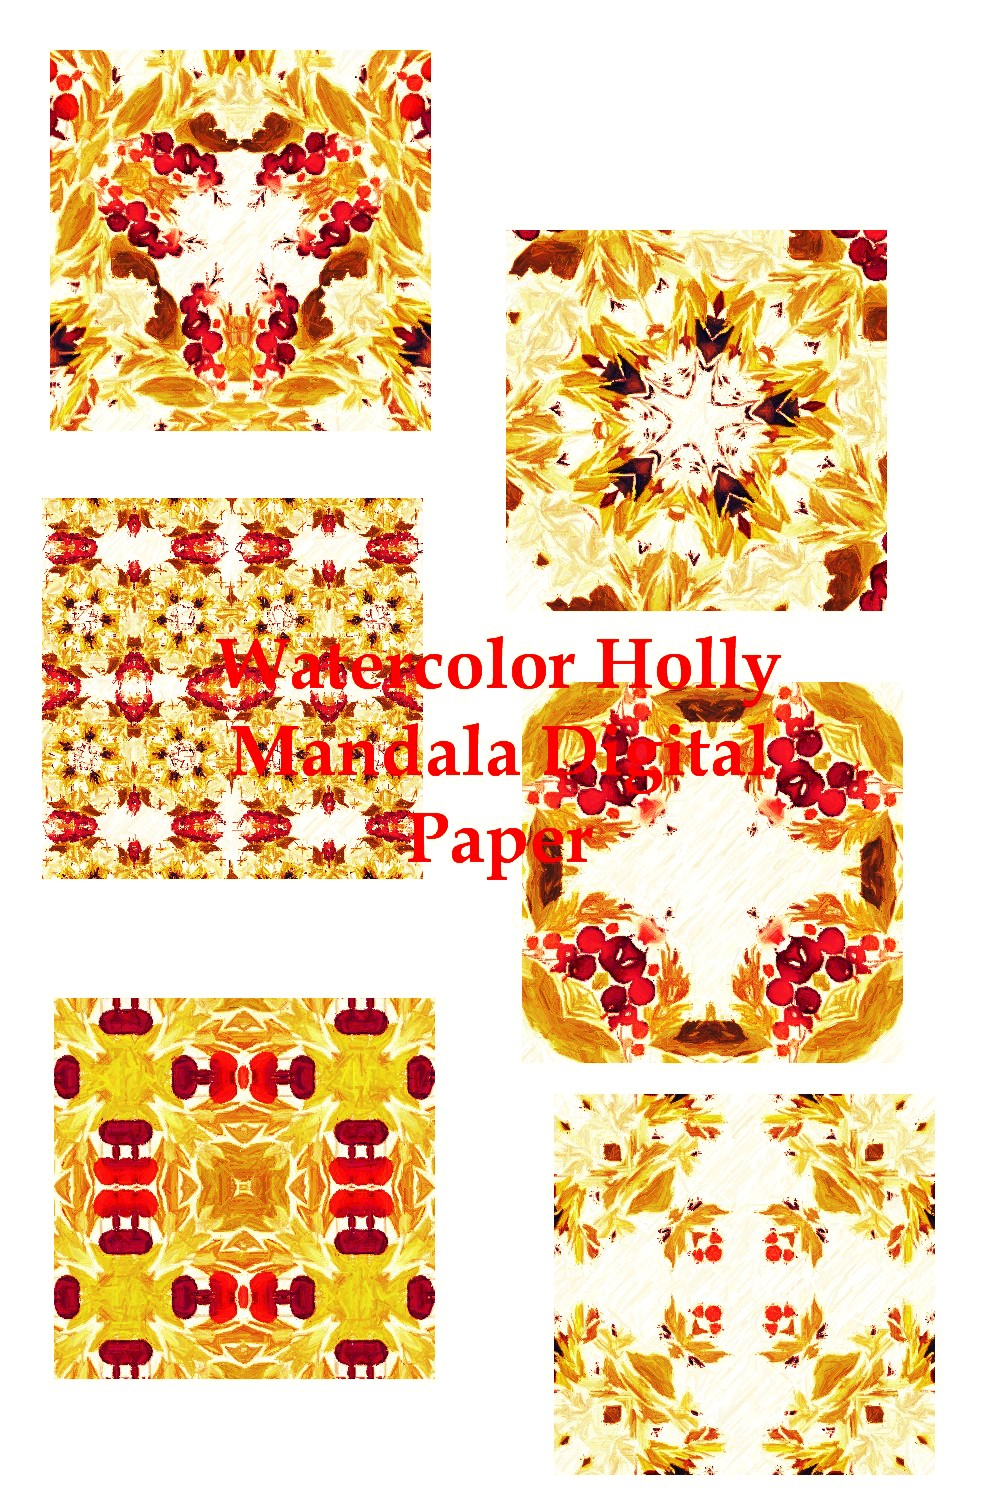 Watercolor Holly Mandala Digital Paper pinterest image.